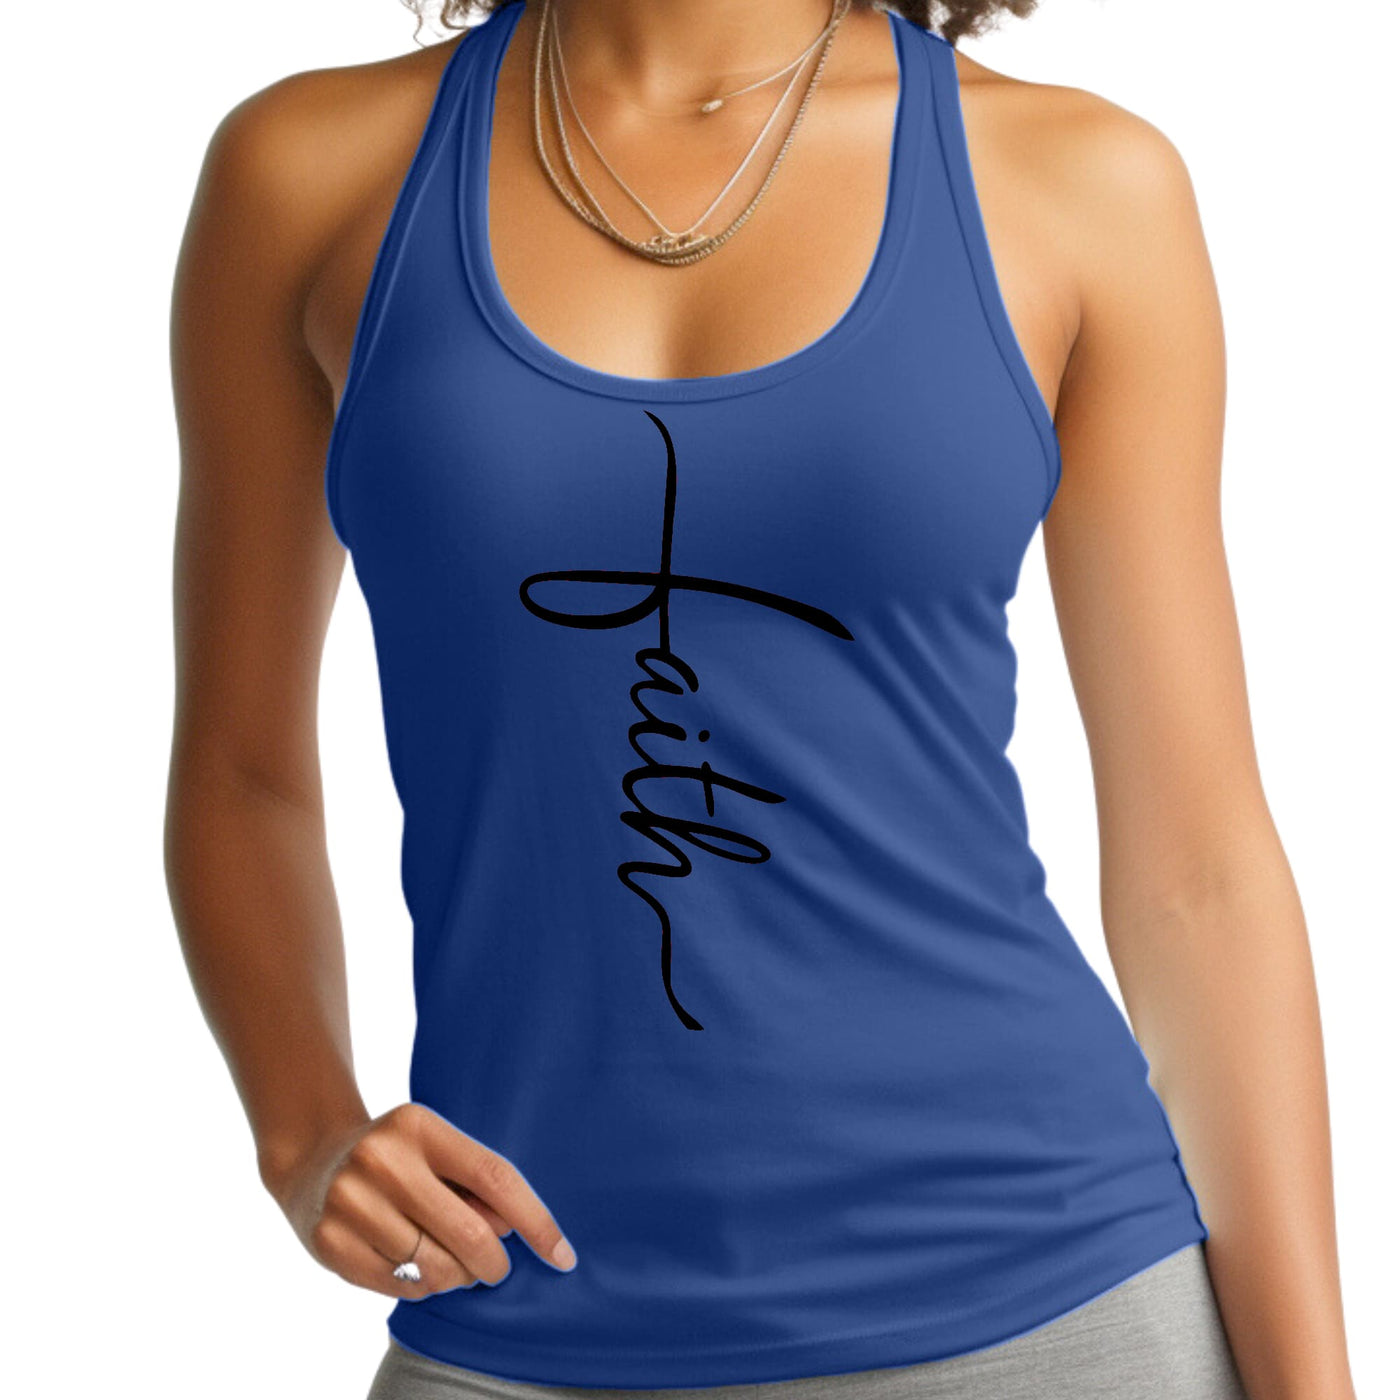 Womens Tank Top Fitness T - shirt Faith Script Cross Black Illustration - Tops